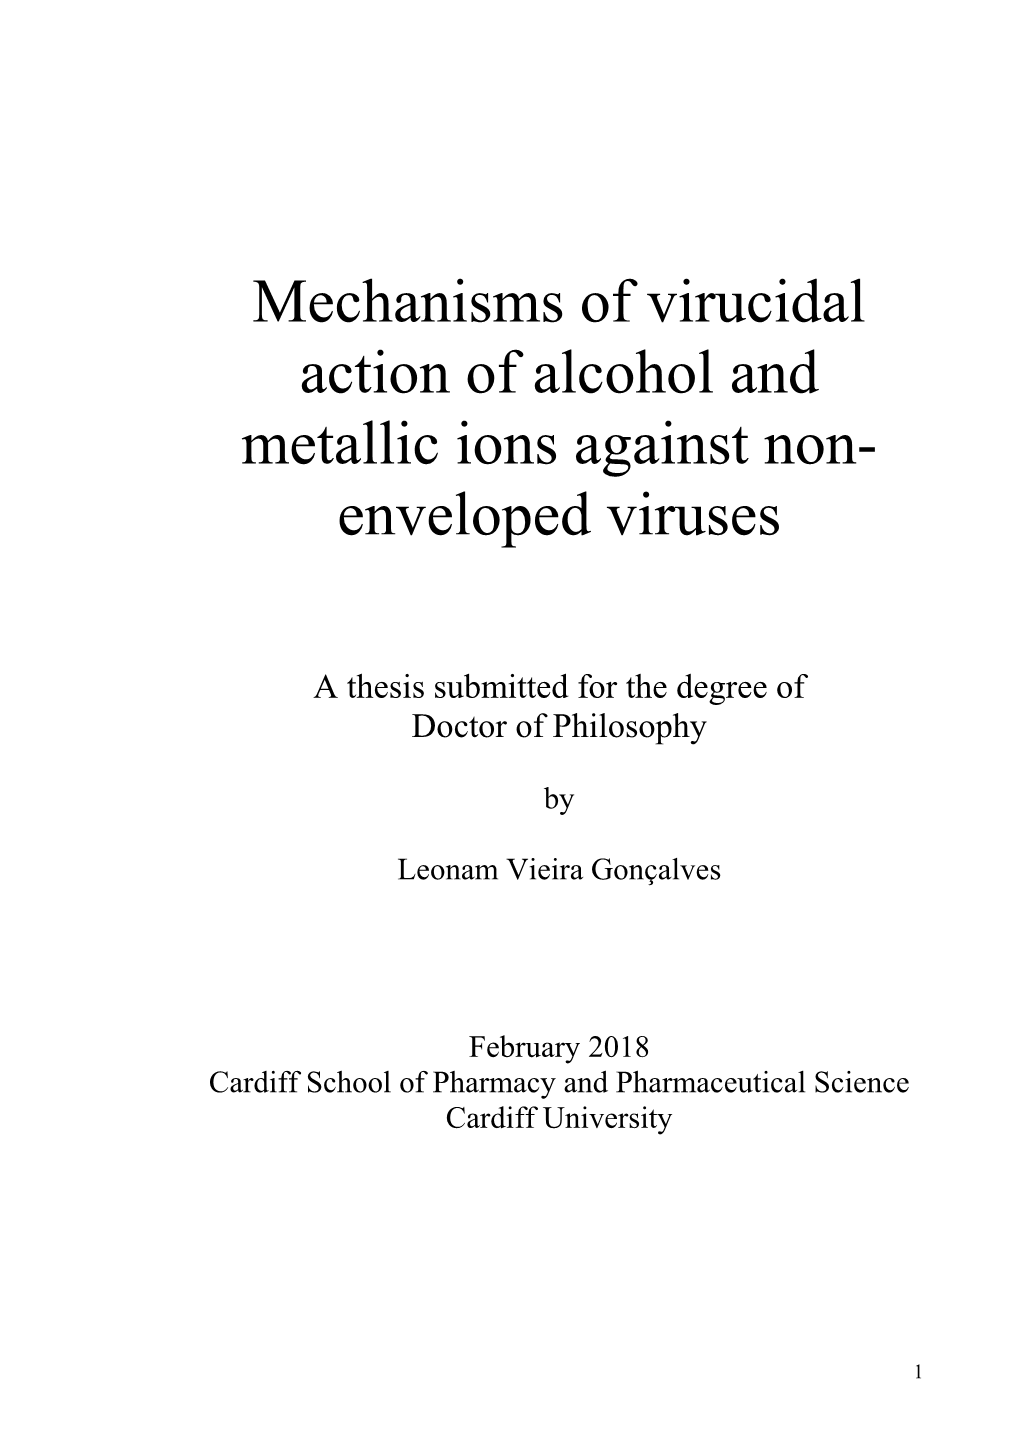 Mechanisms of Virucidal Action of Alcohol and Metallic Ions Against Non- Enveloped Viruses